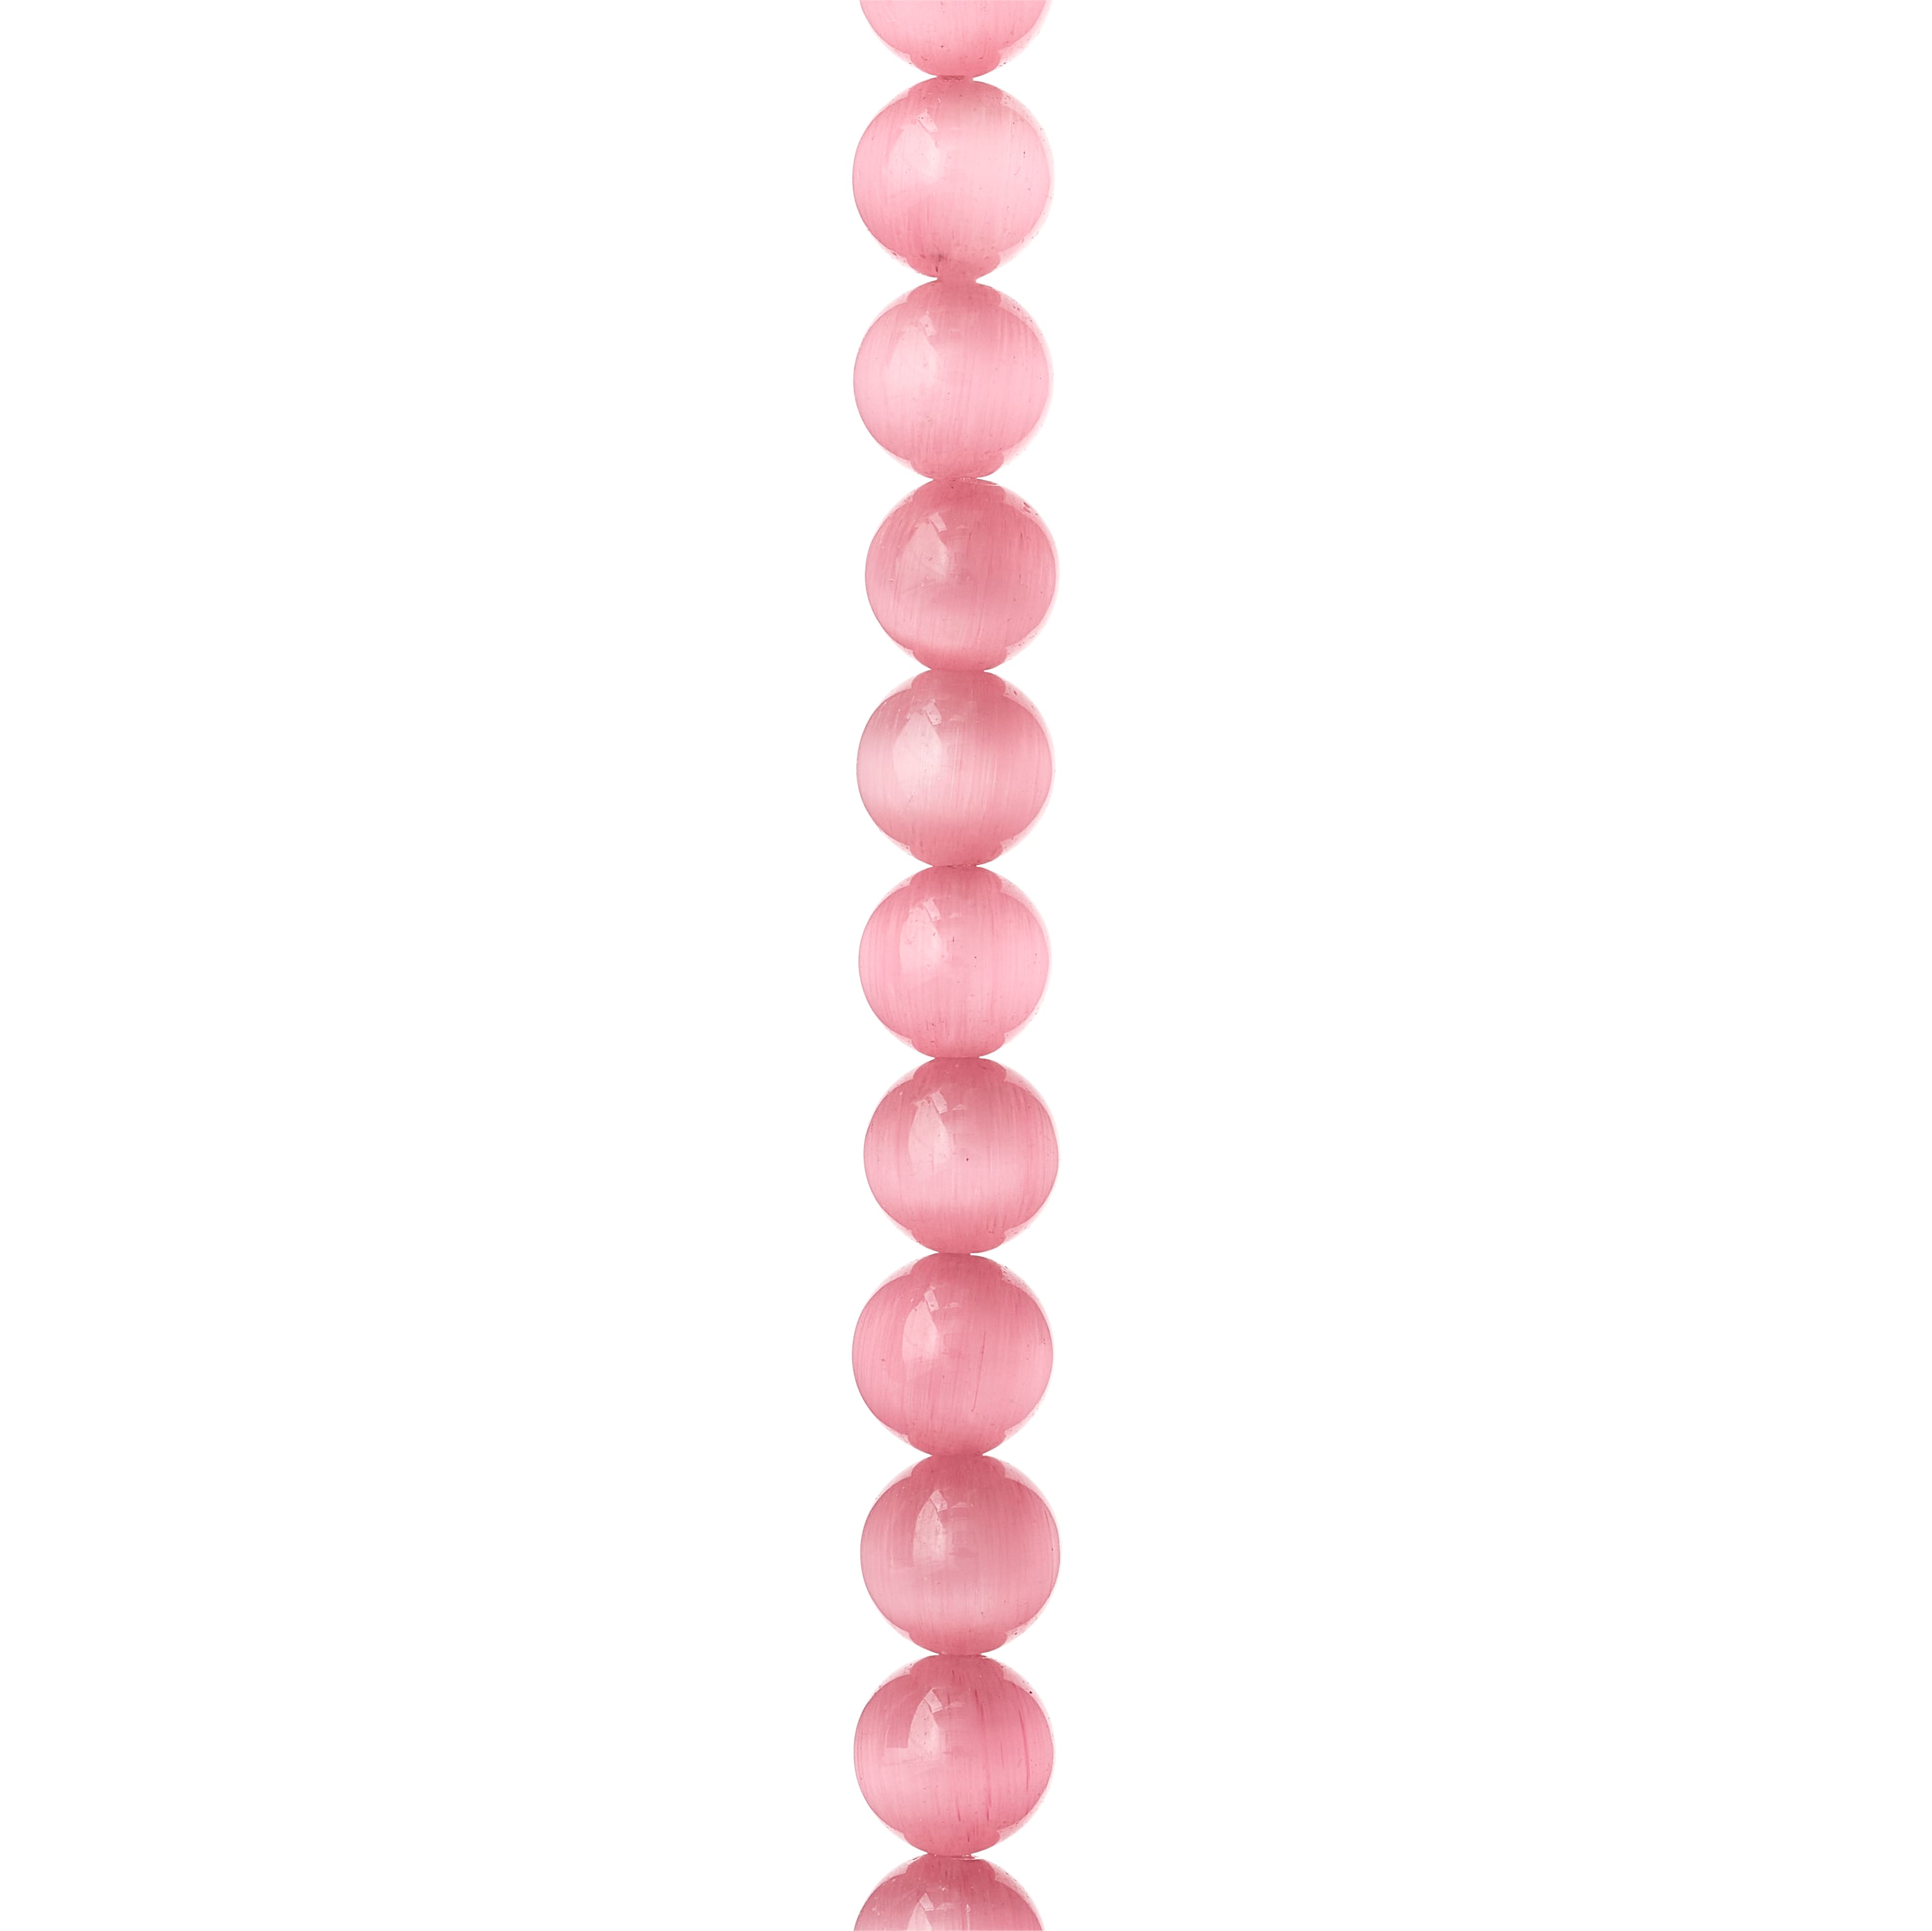 Pink Rose Quartz Round Beads, 10mm by Bead Landing | Michaels